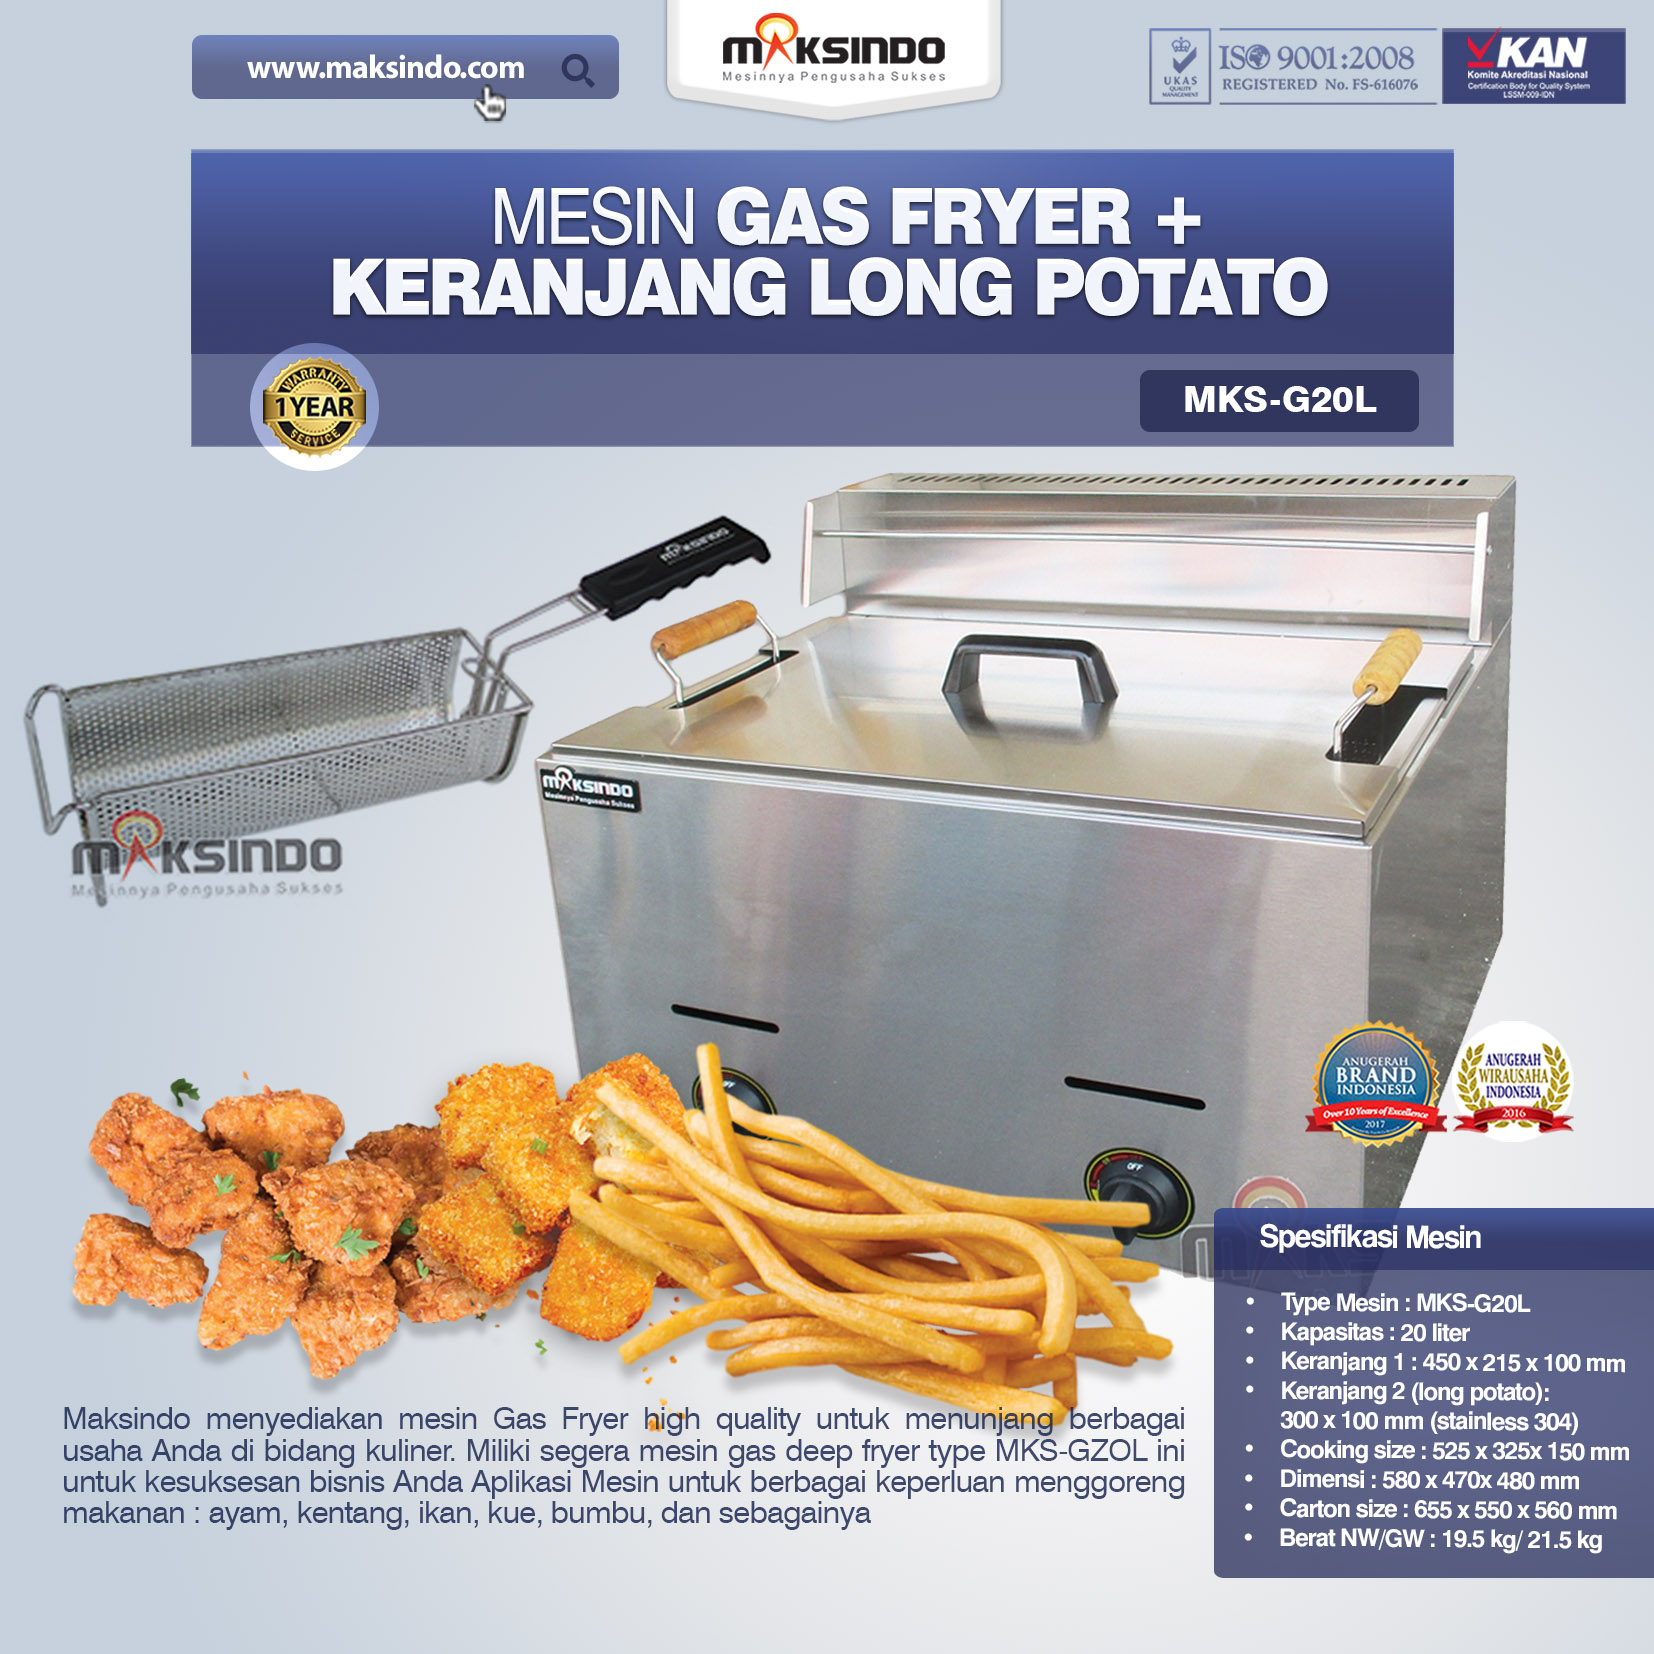 Jual Mesin Gas Fryer MKS-G20L + Keranjang Long Potato Di Malang